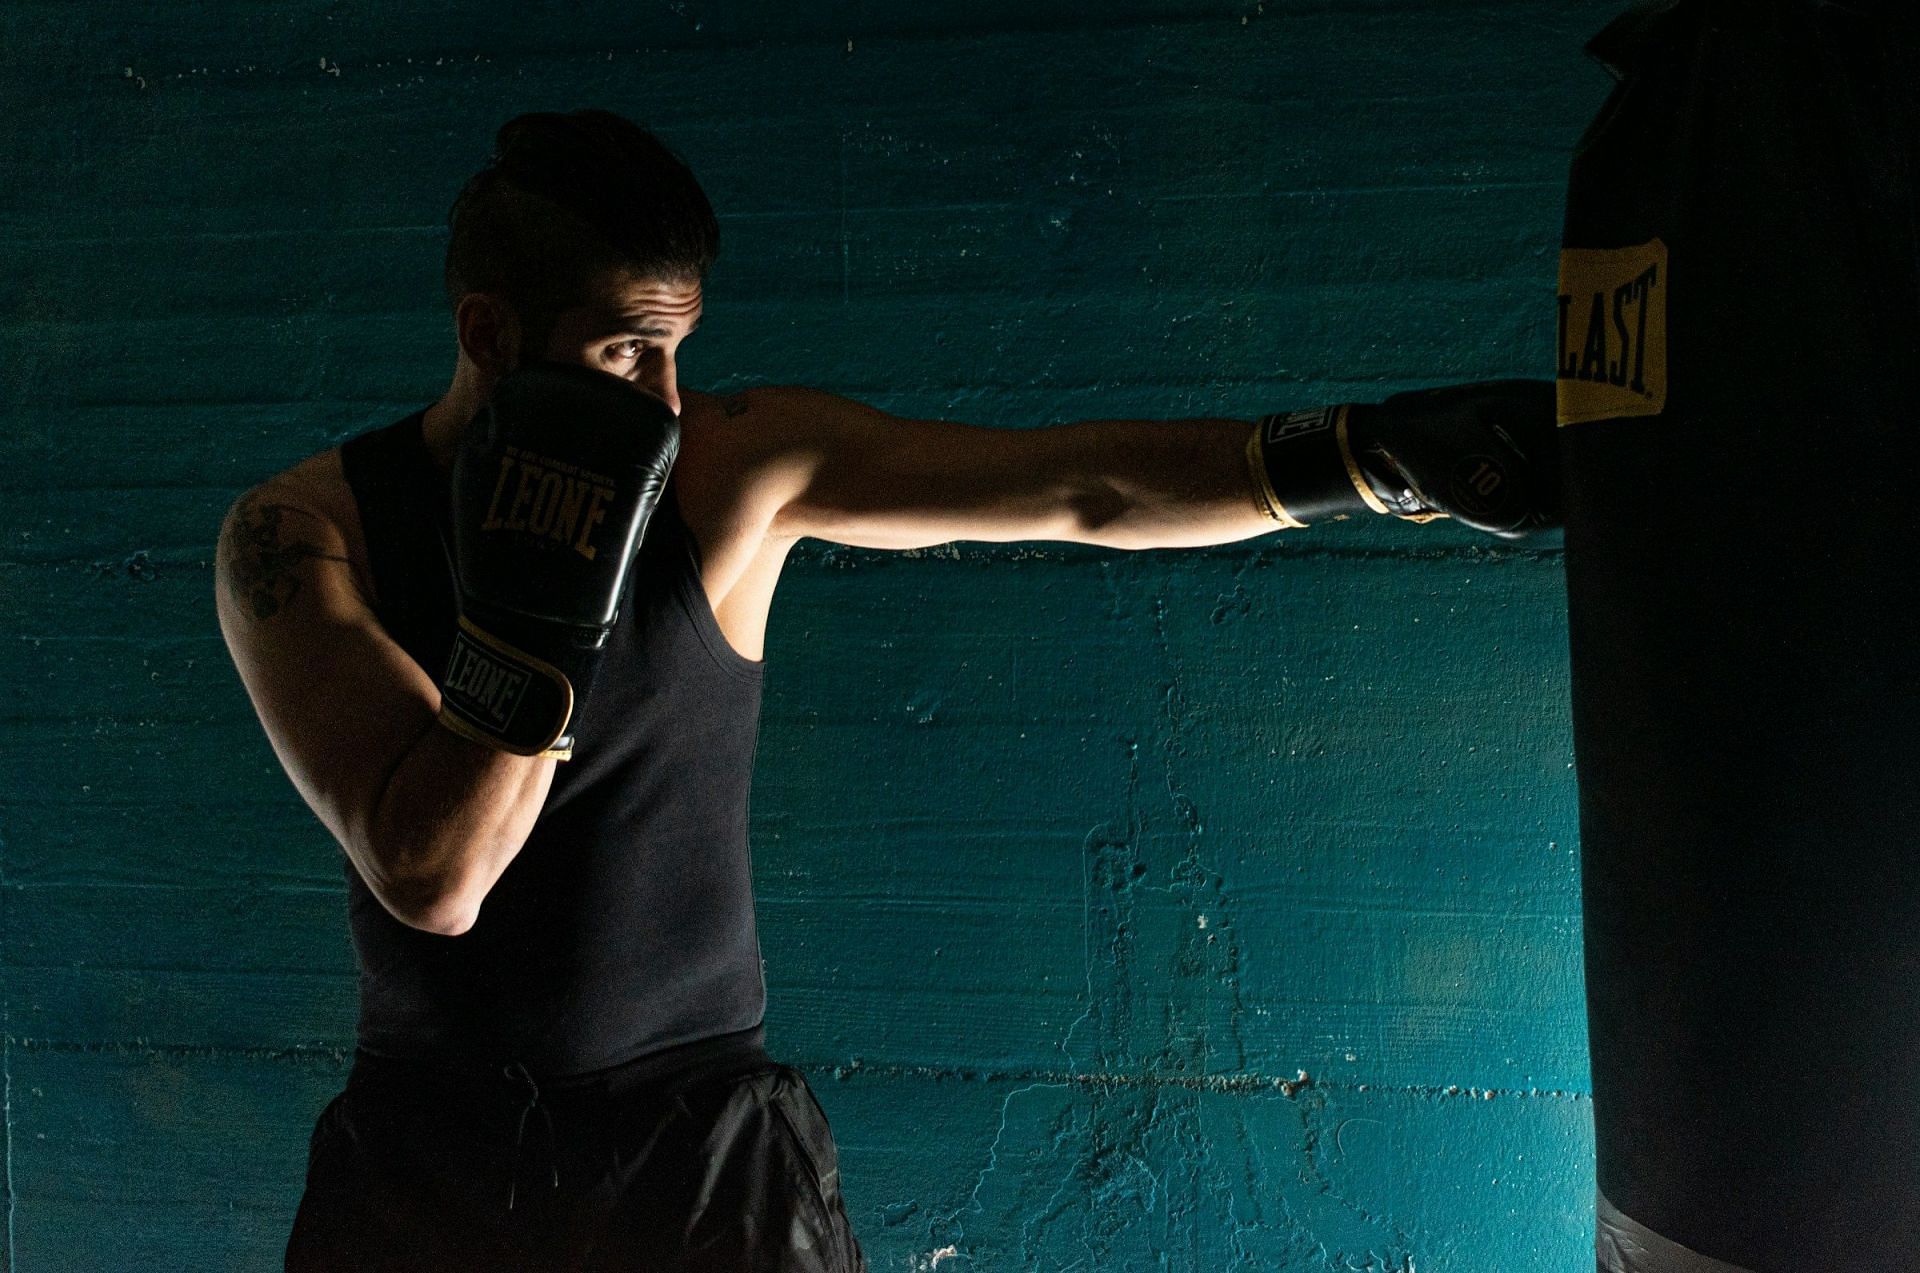 Benefits of boxing: Improves your hand-eye coordination (Image by Lorenzo Fatto Offidani/Unsplash)